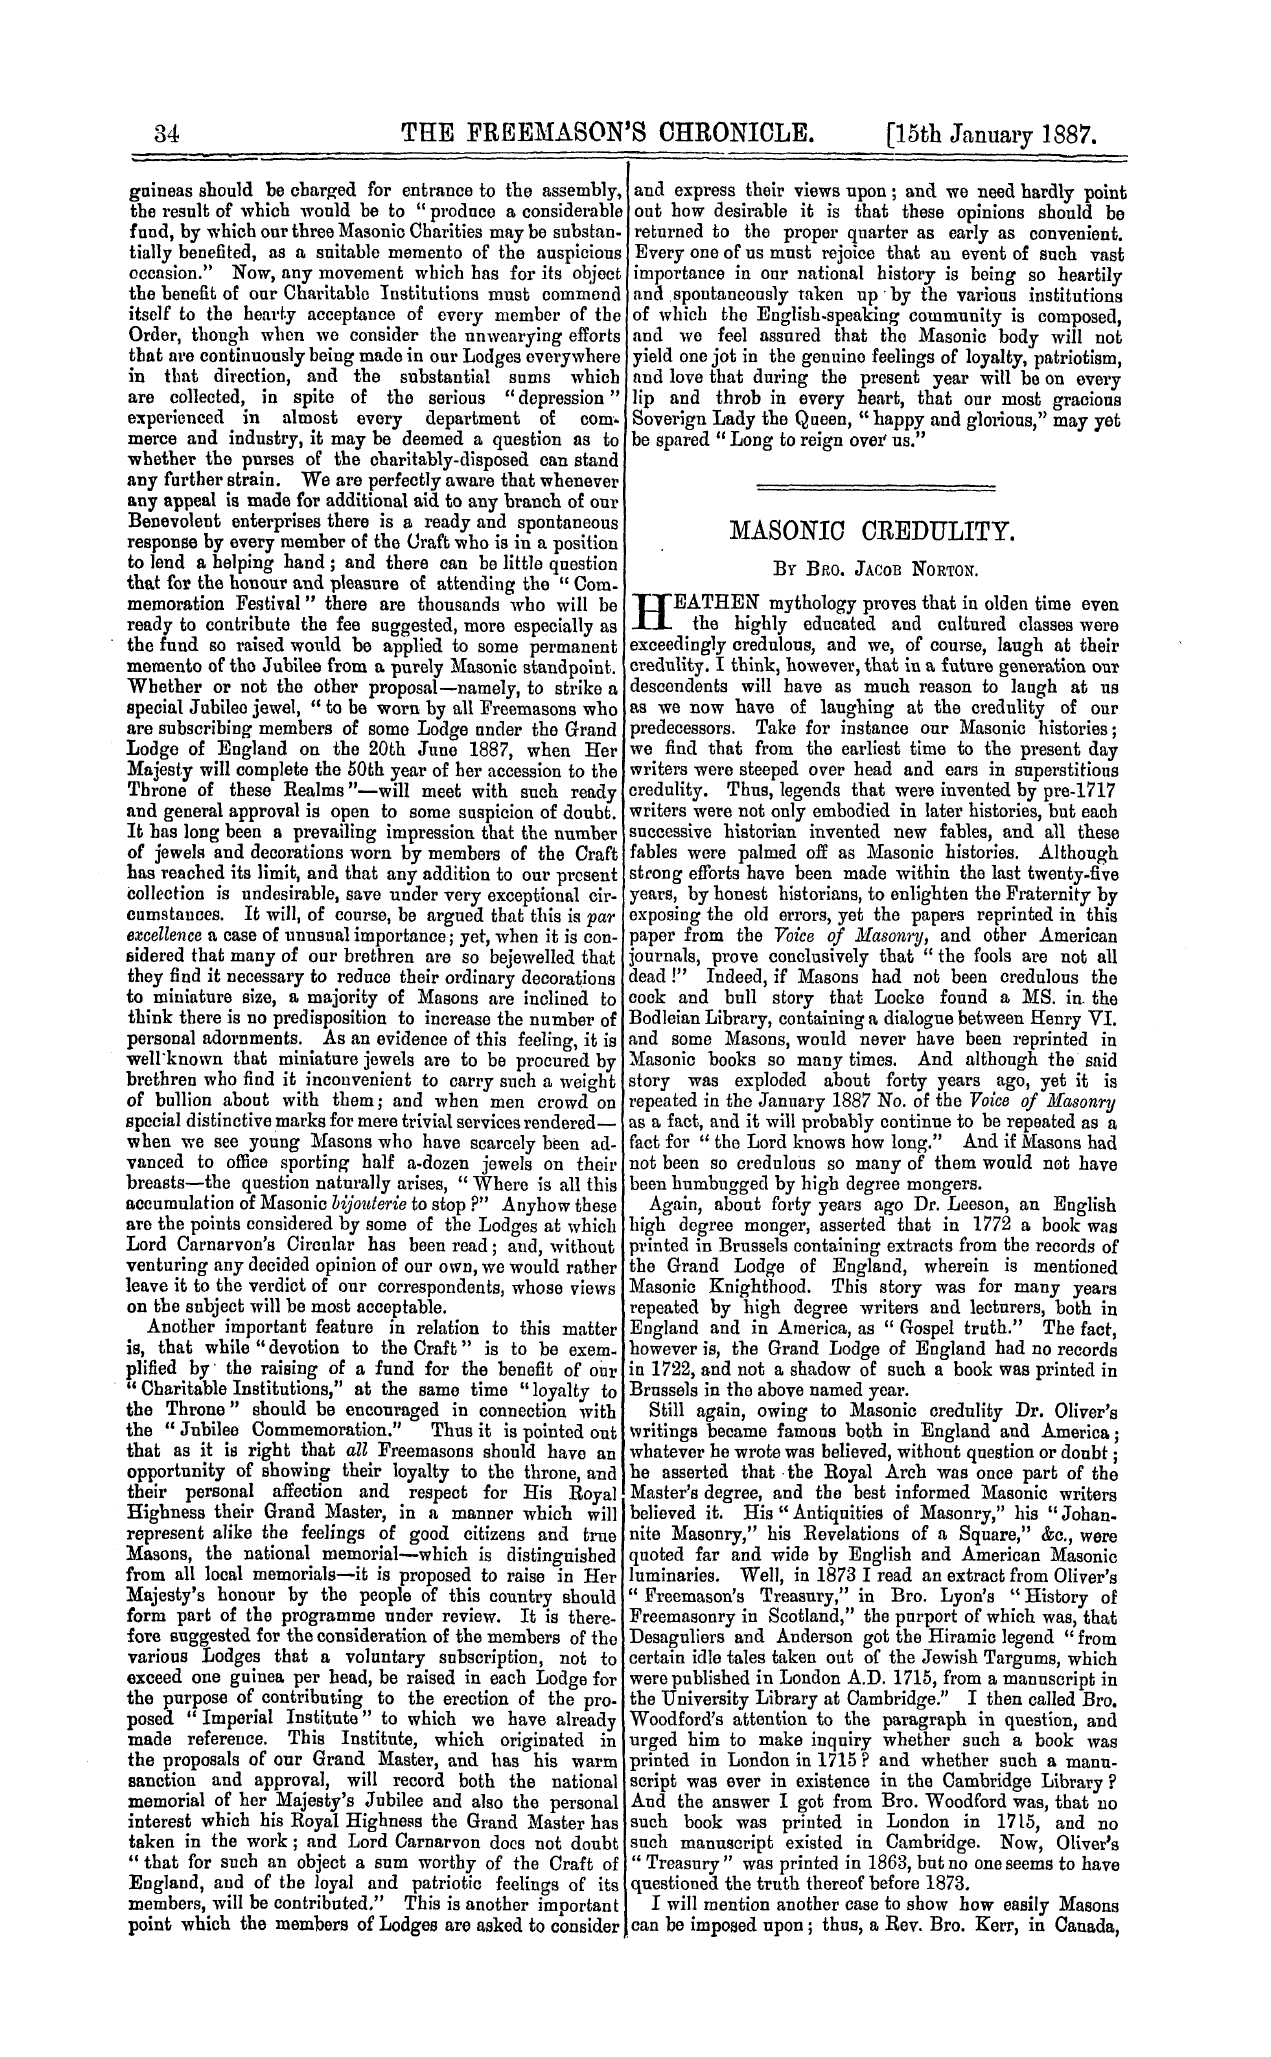 The Freemason's Chronicle: 1887-01-15 - The Royal Jubilee.